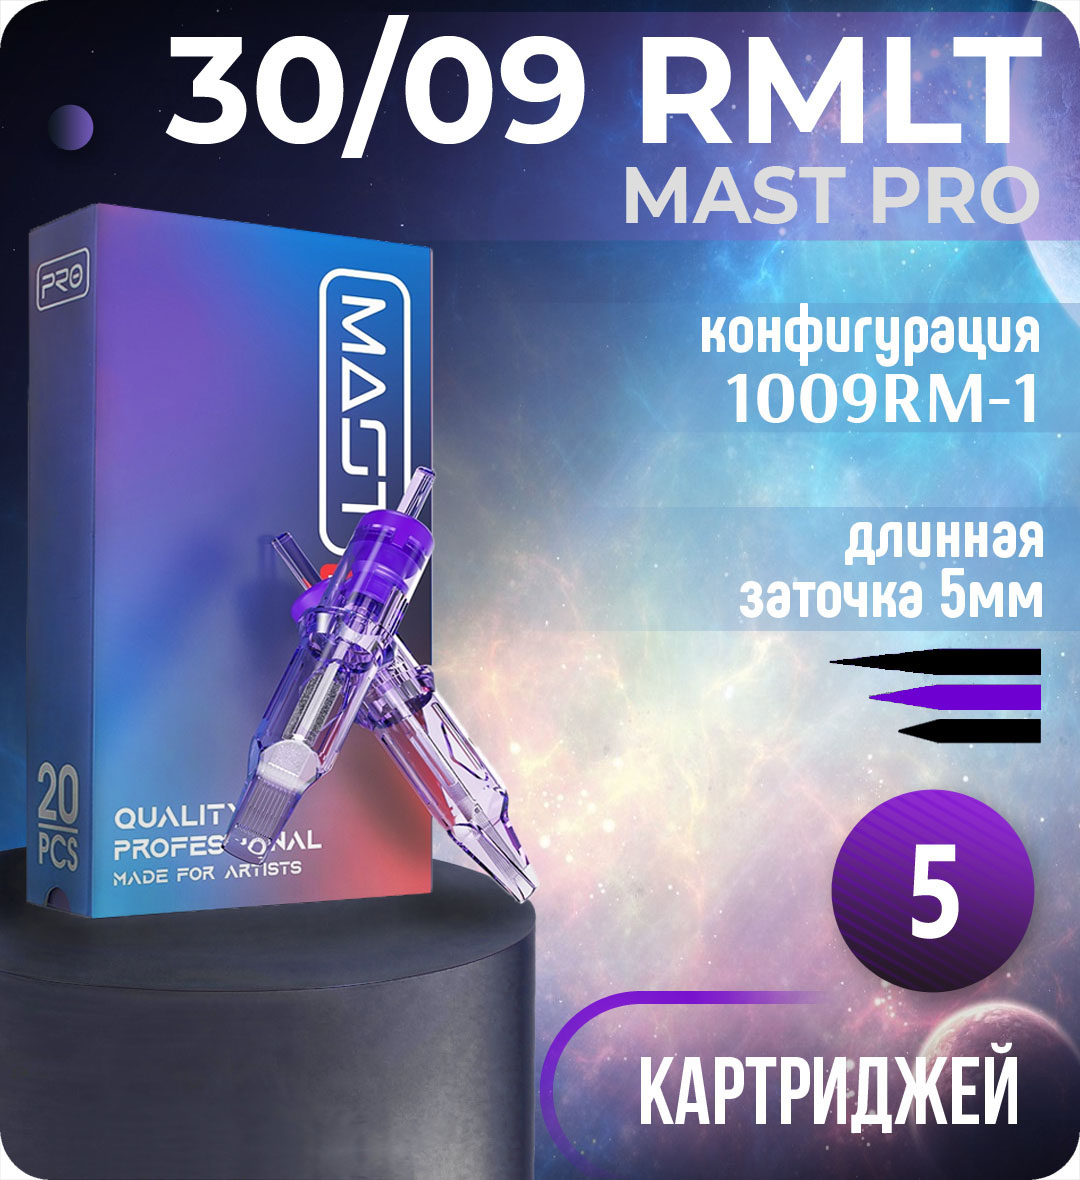 Картриджи Mast Pro 30/09 RMLT (1009RM-1) для тату, перманентного макияжа и татуажа Dragonhawk 5шт